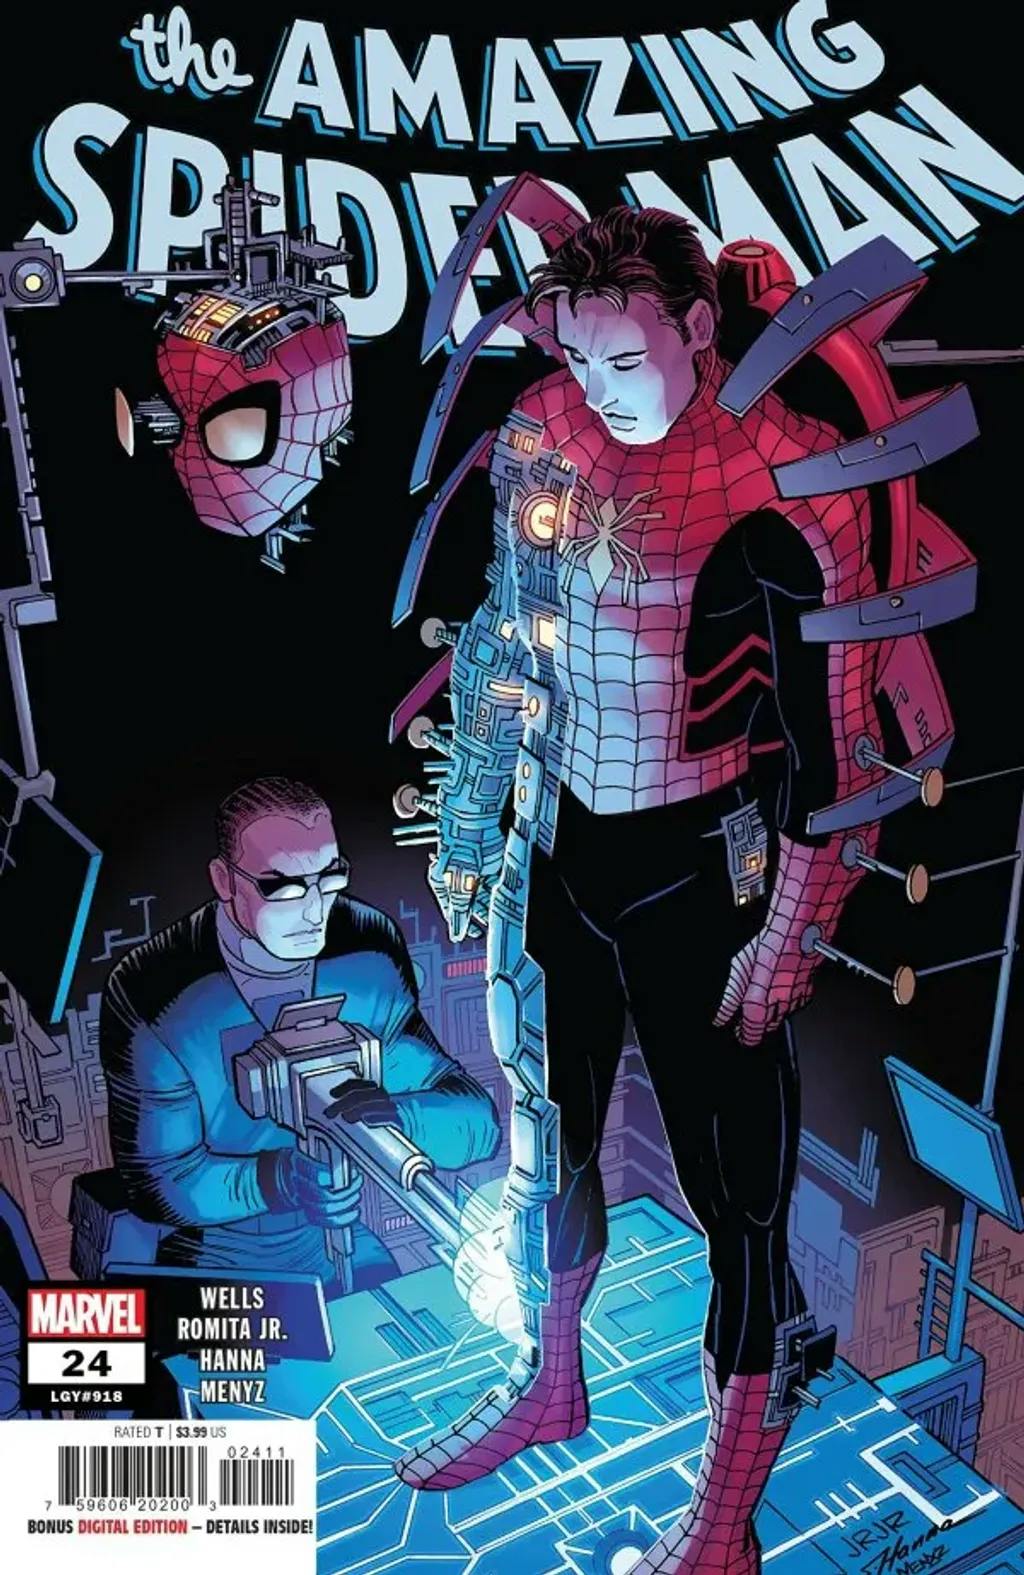 The Amazing Spider-Man #24 by Zeb Wells, John Romita Jr., Scott Hanna, and Marcio Menyz